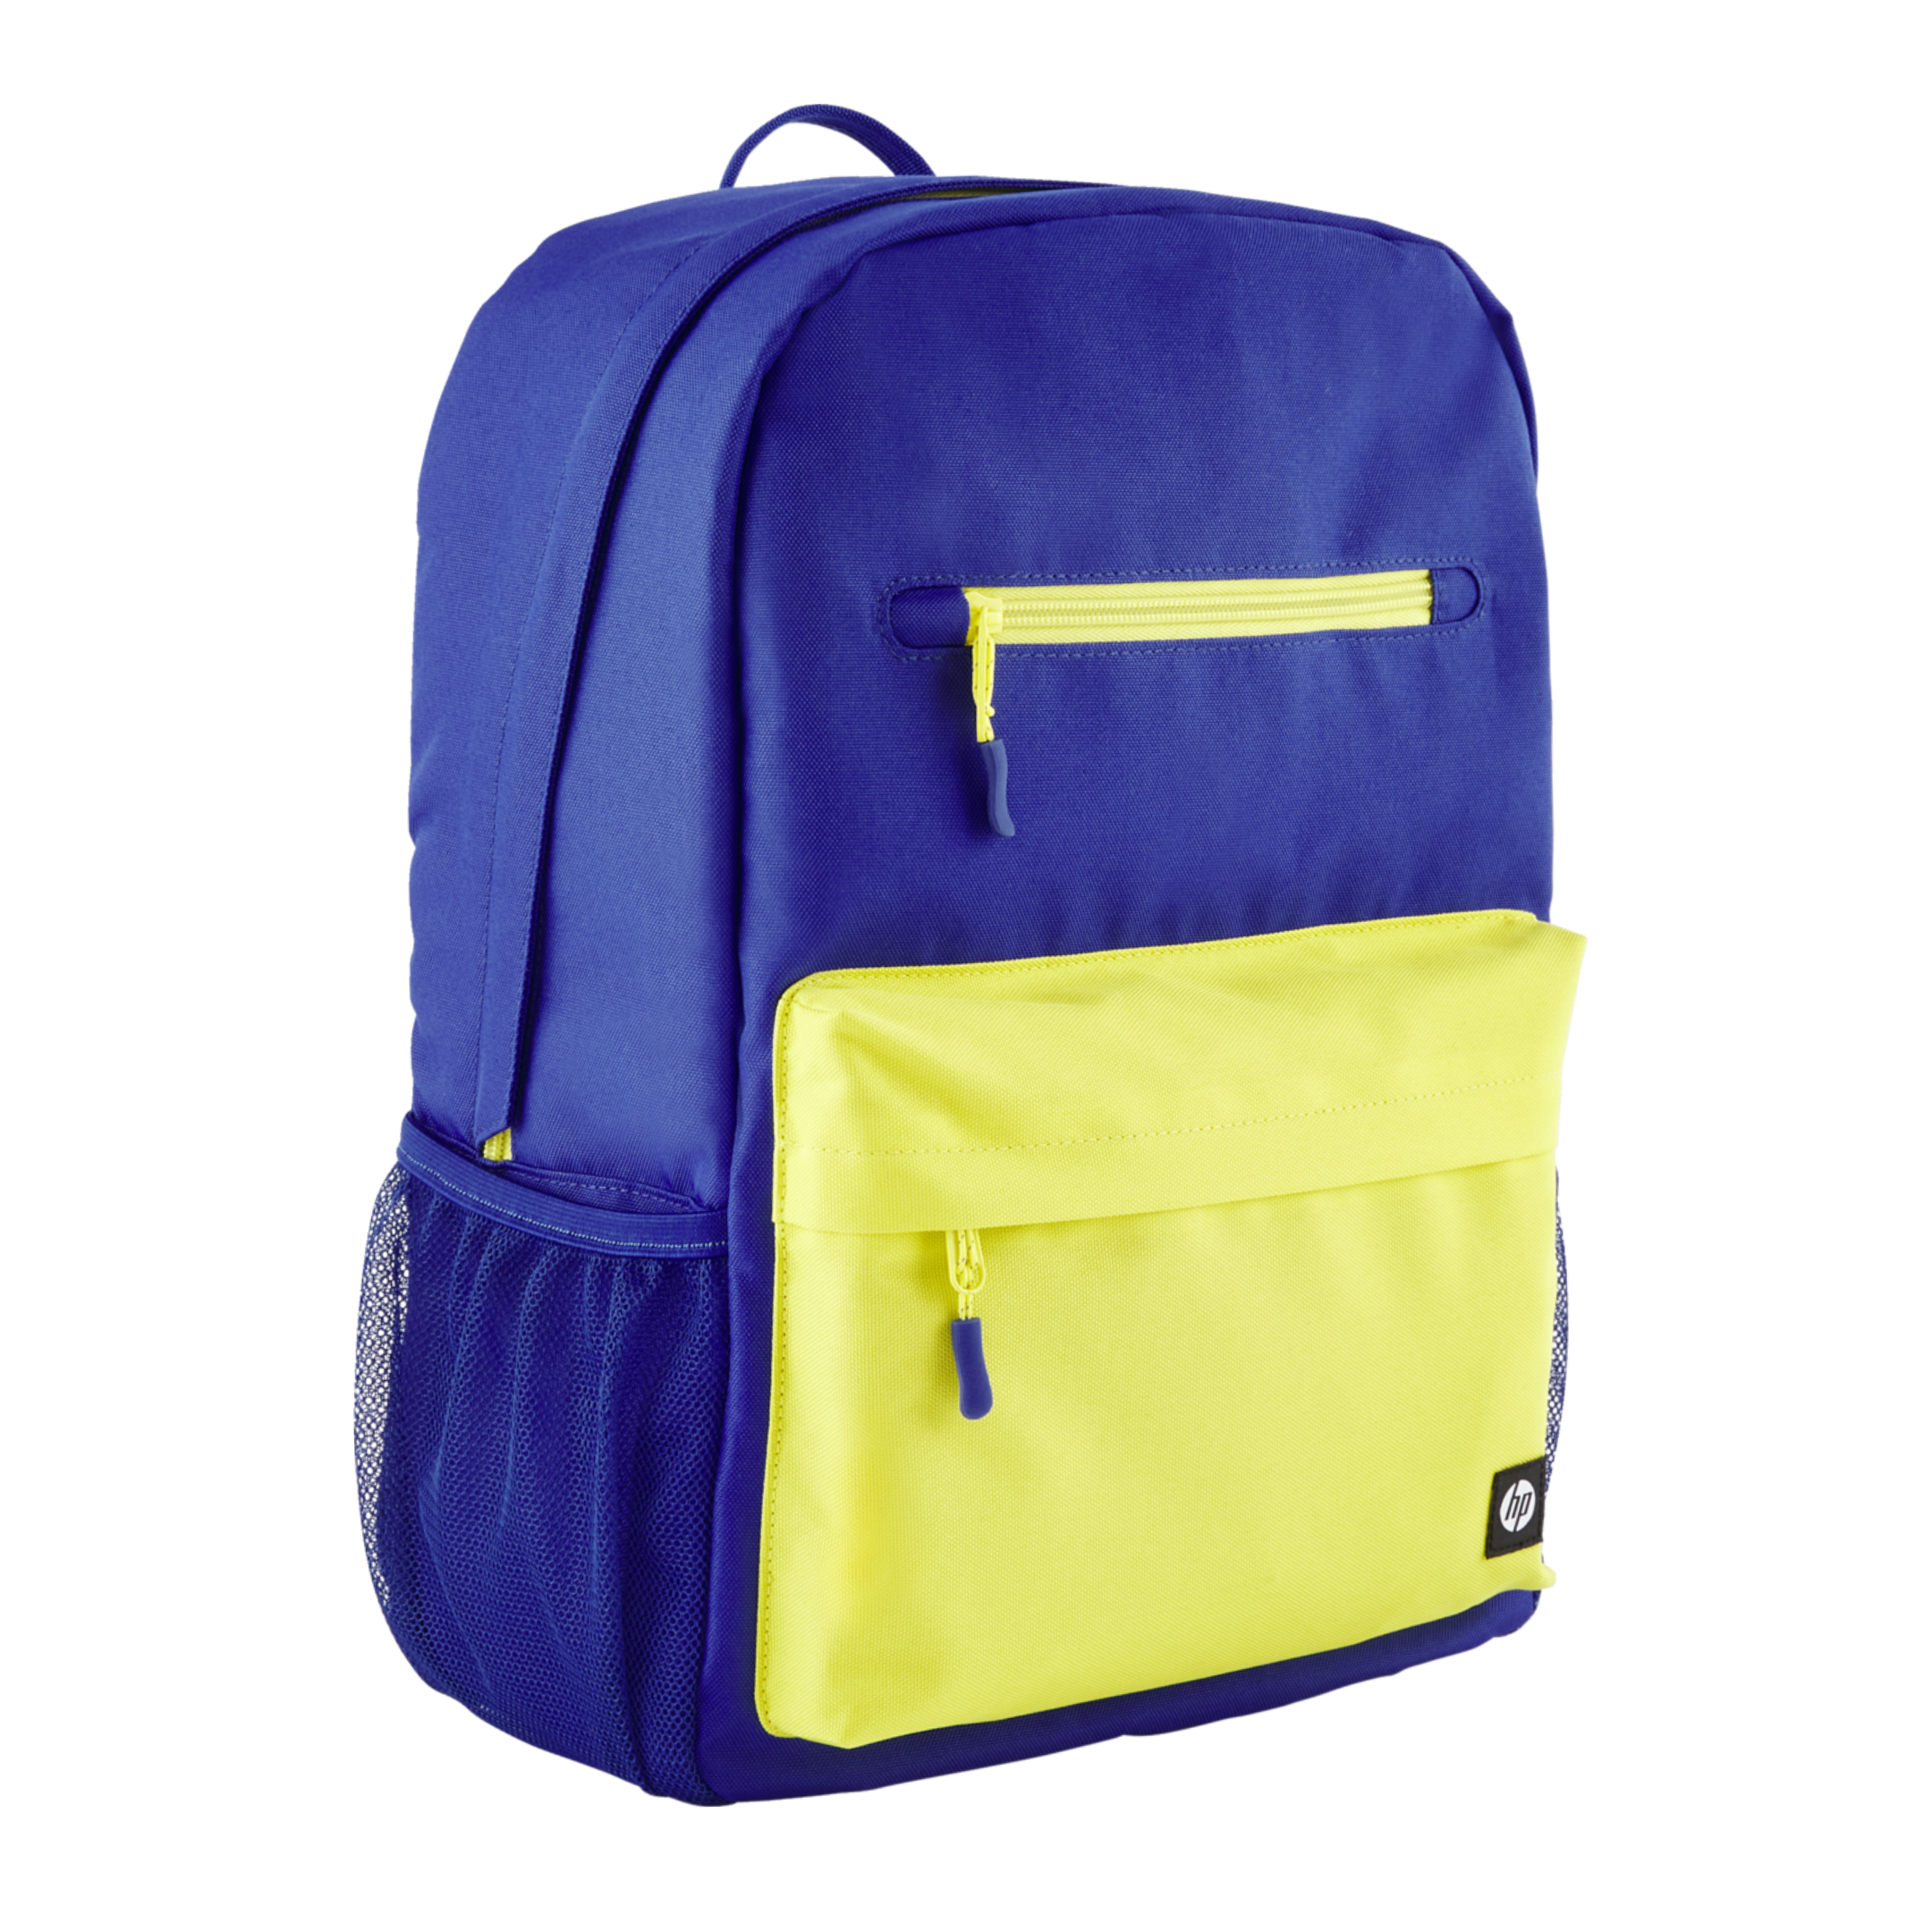 Mochila HP Campus XL Blue Backpack 15.6" (7J596AA)